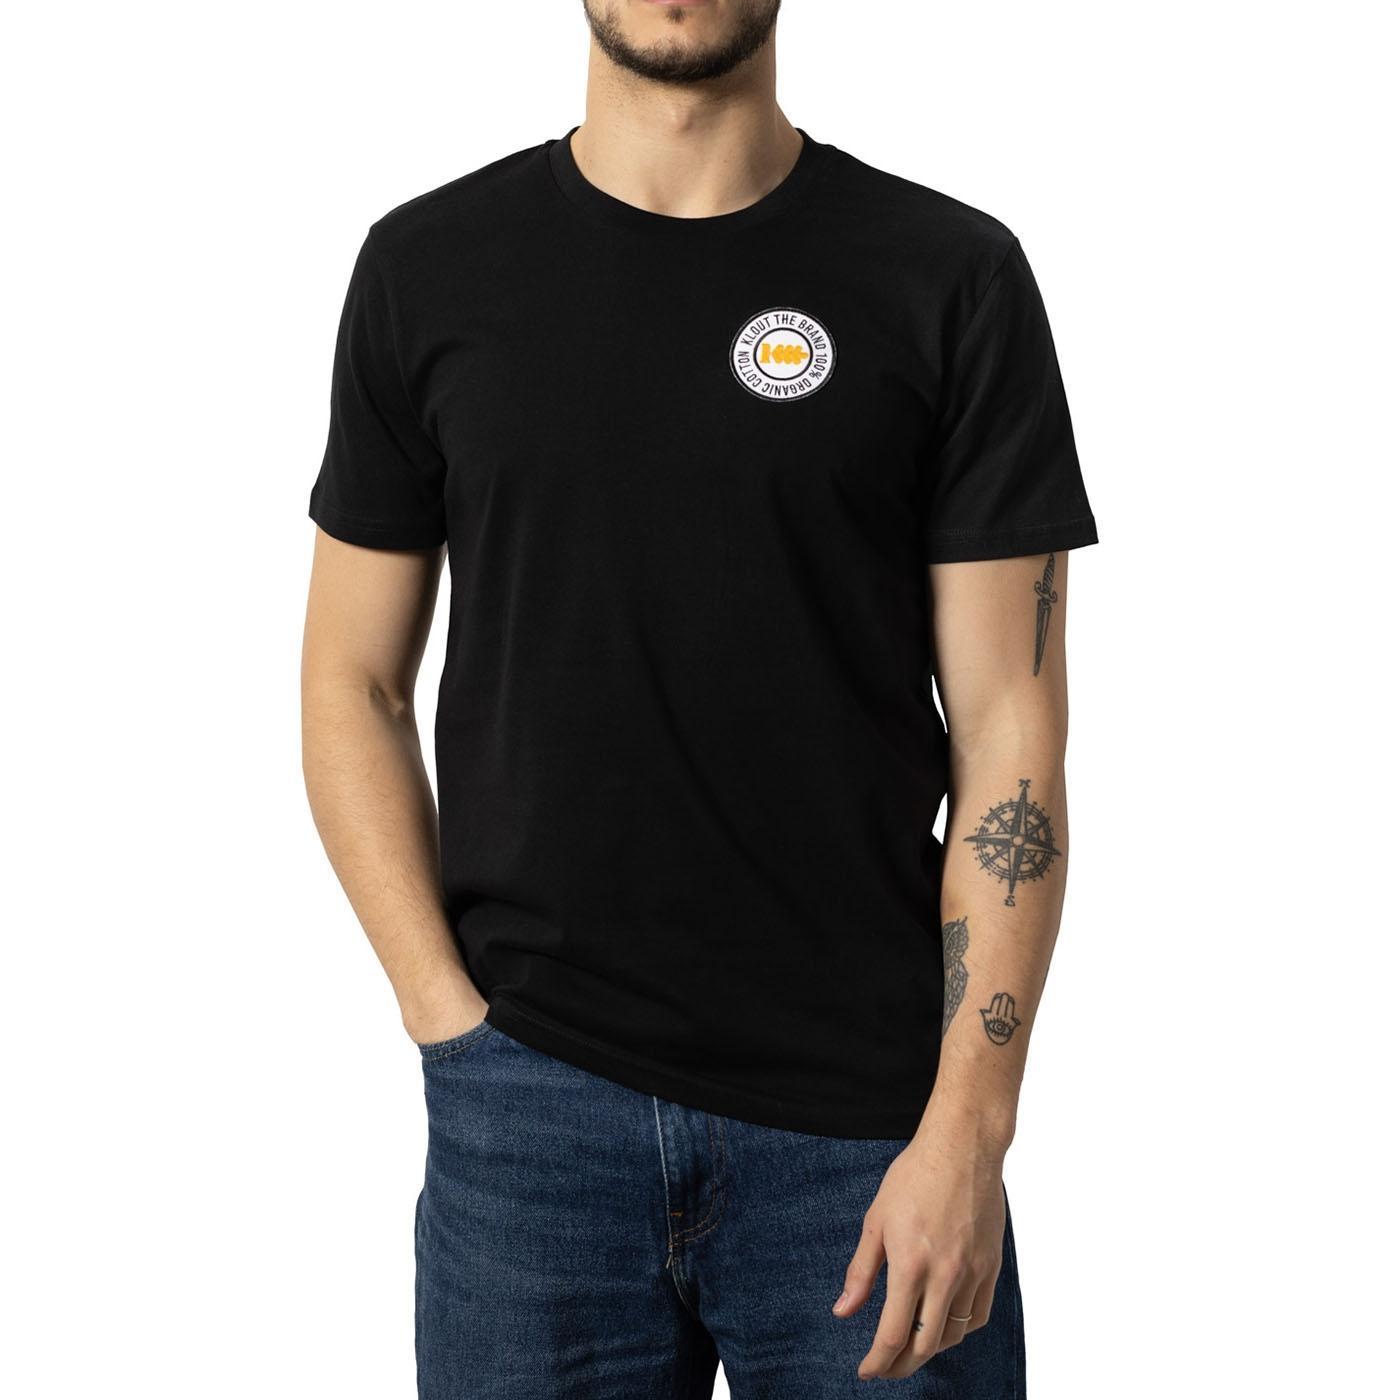 KLOUT - KLOUT Camiseta Hombre Negra Algodón Orgánico Corte Clásico